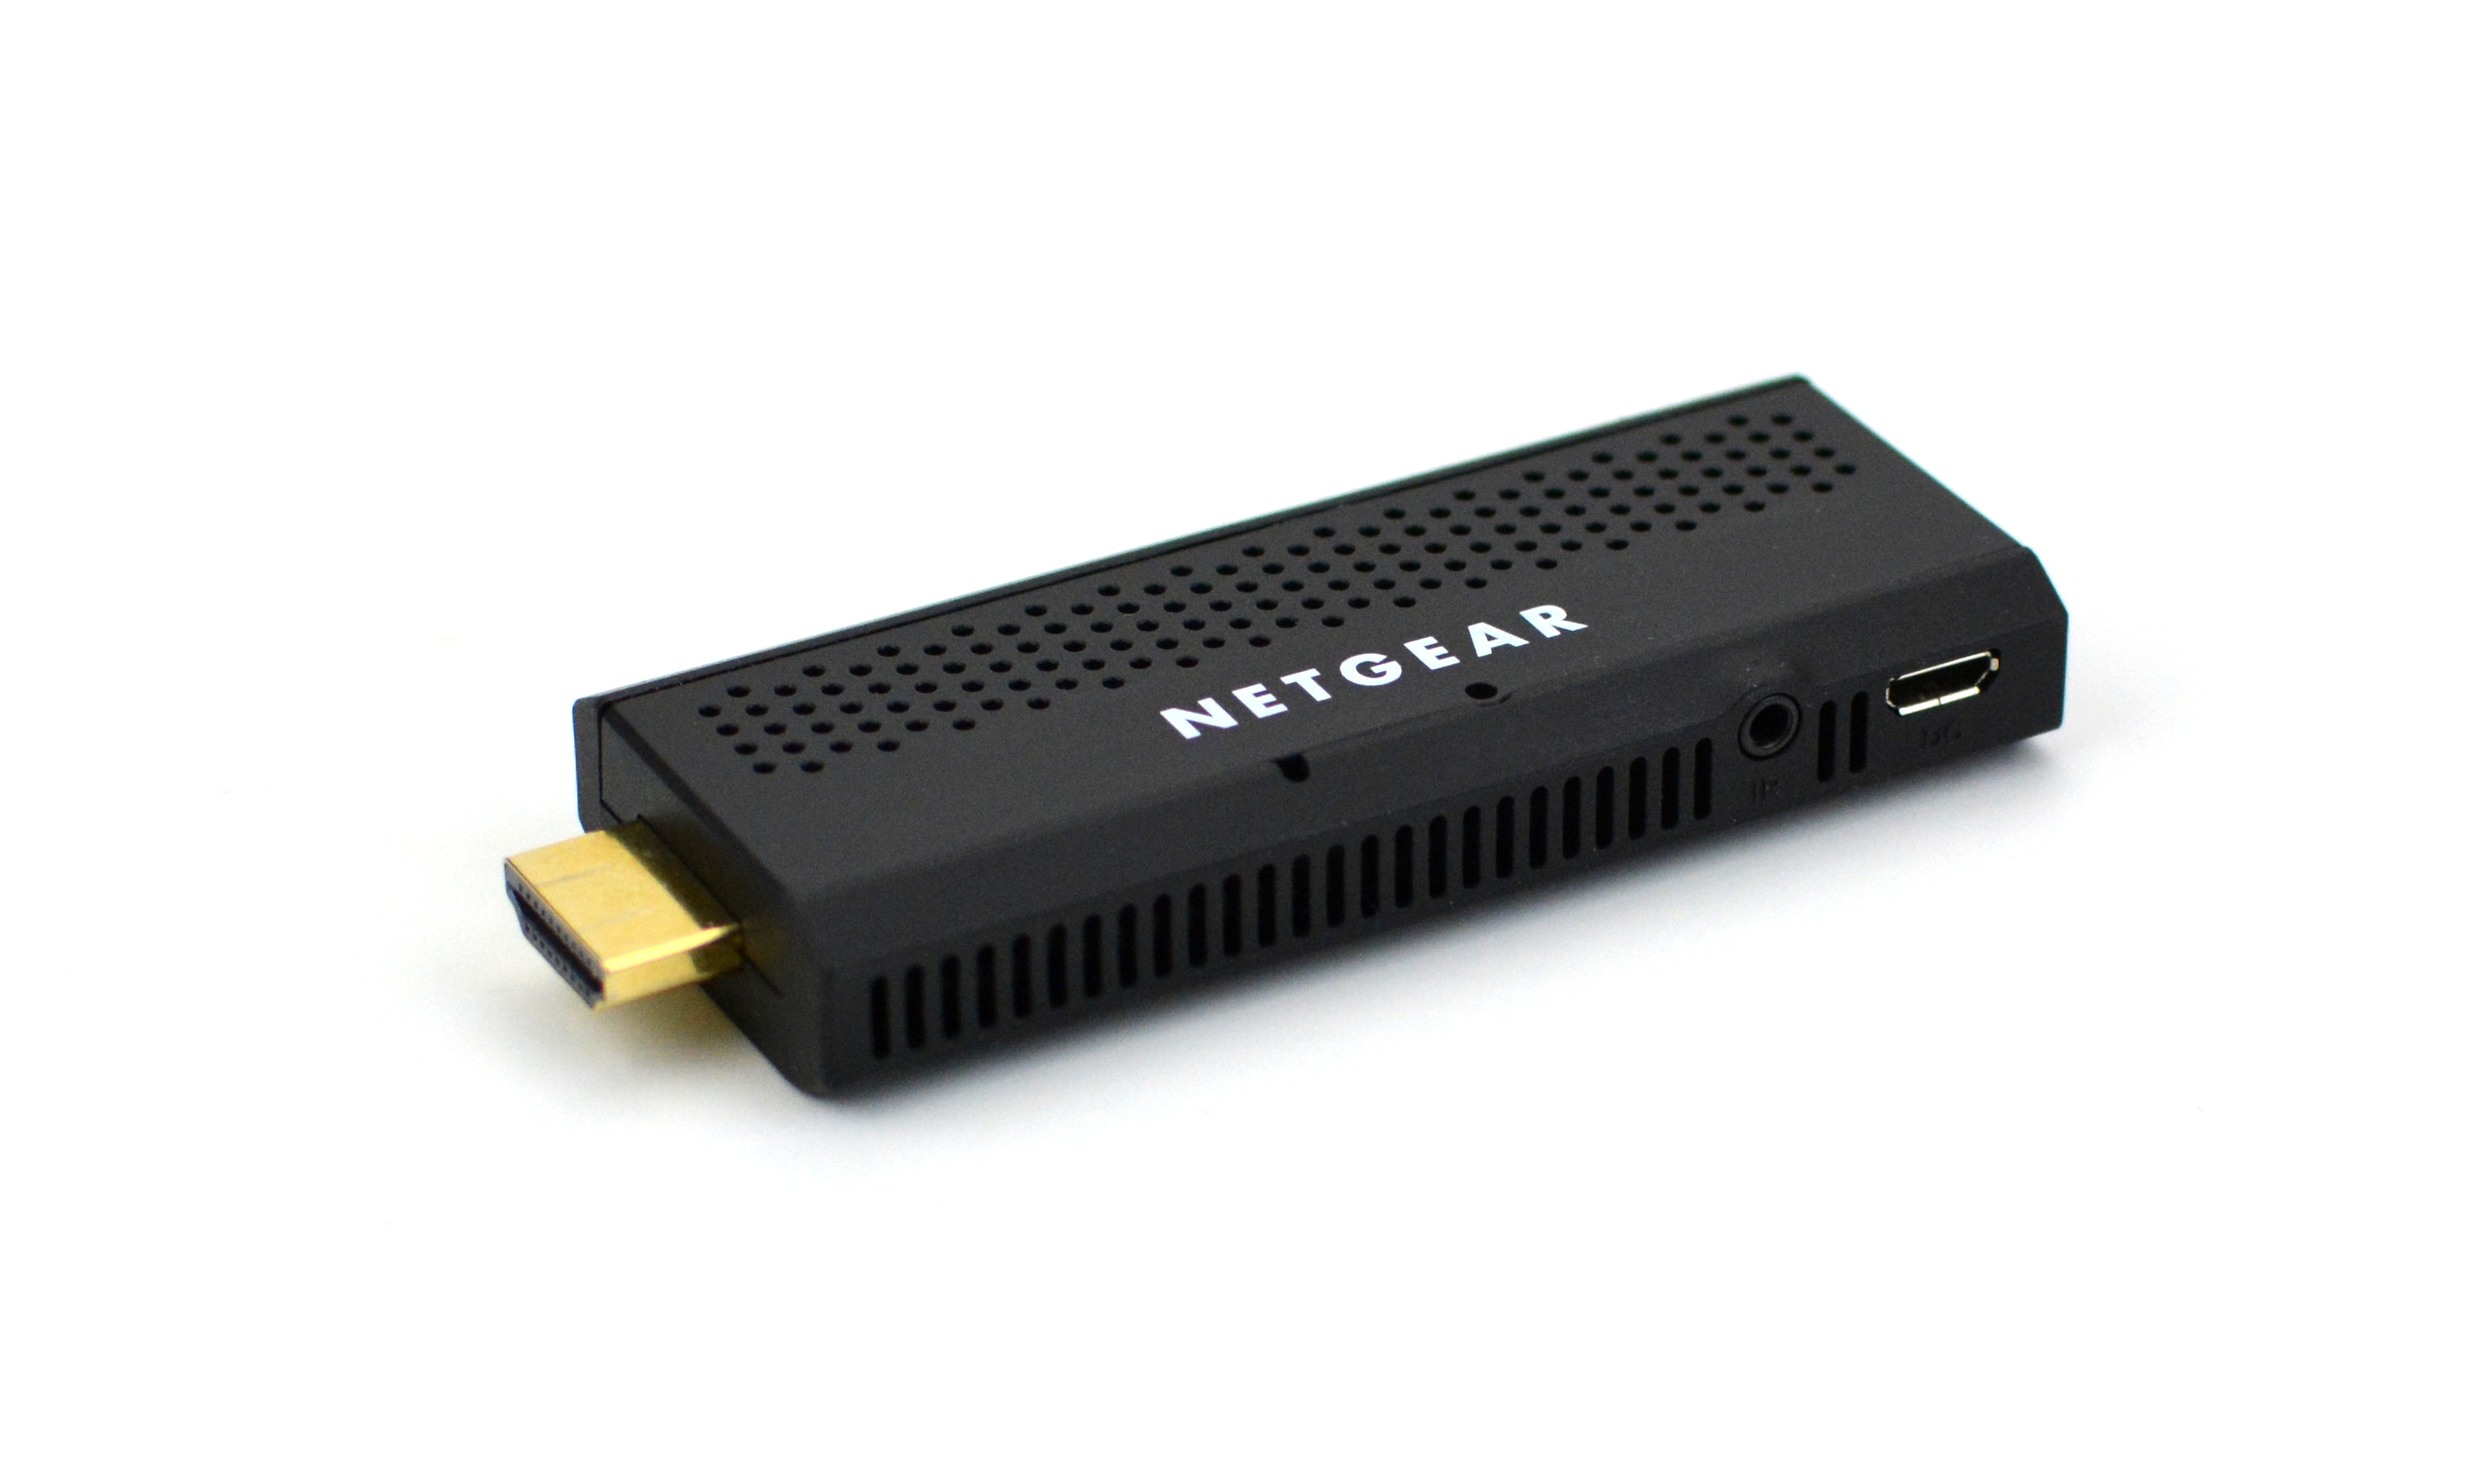 Netgear NeoMediacast : un dongle HDMI sous Android avec Miracast